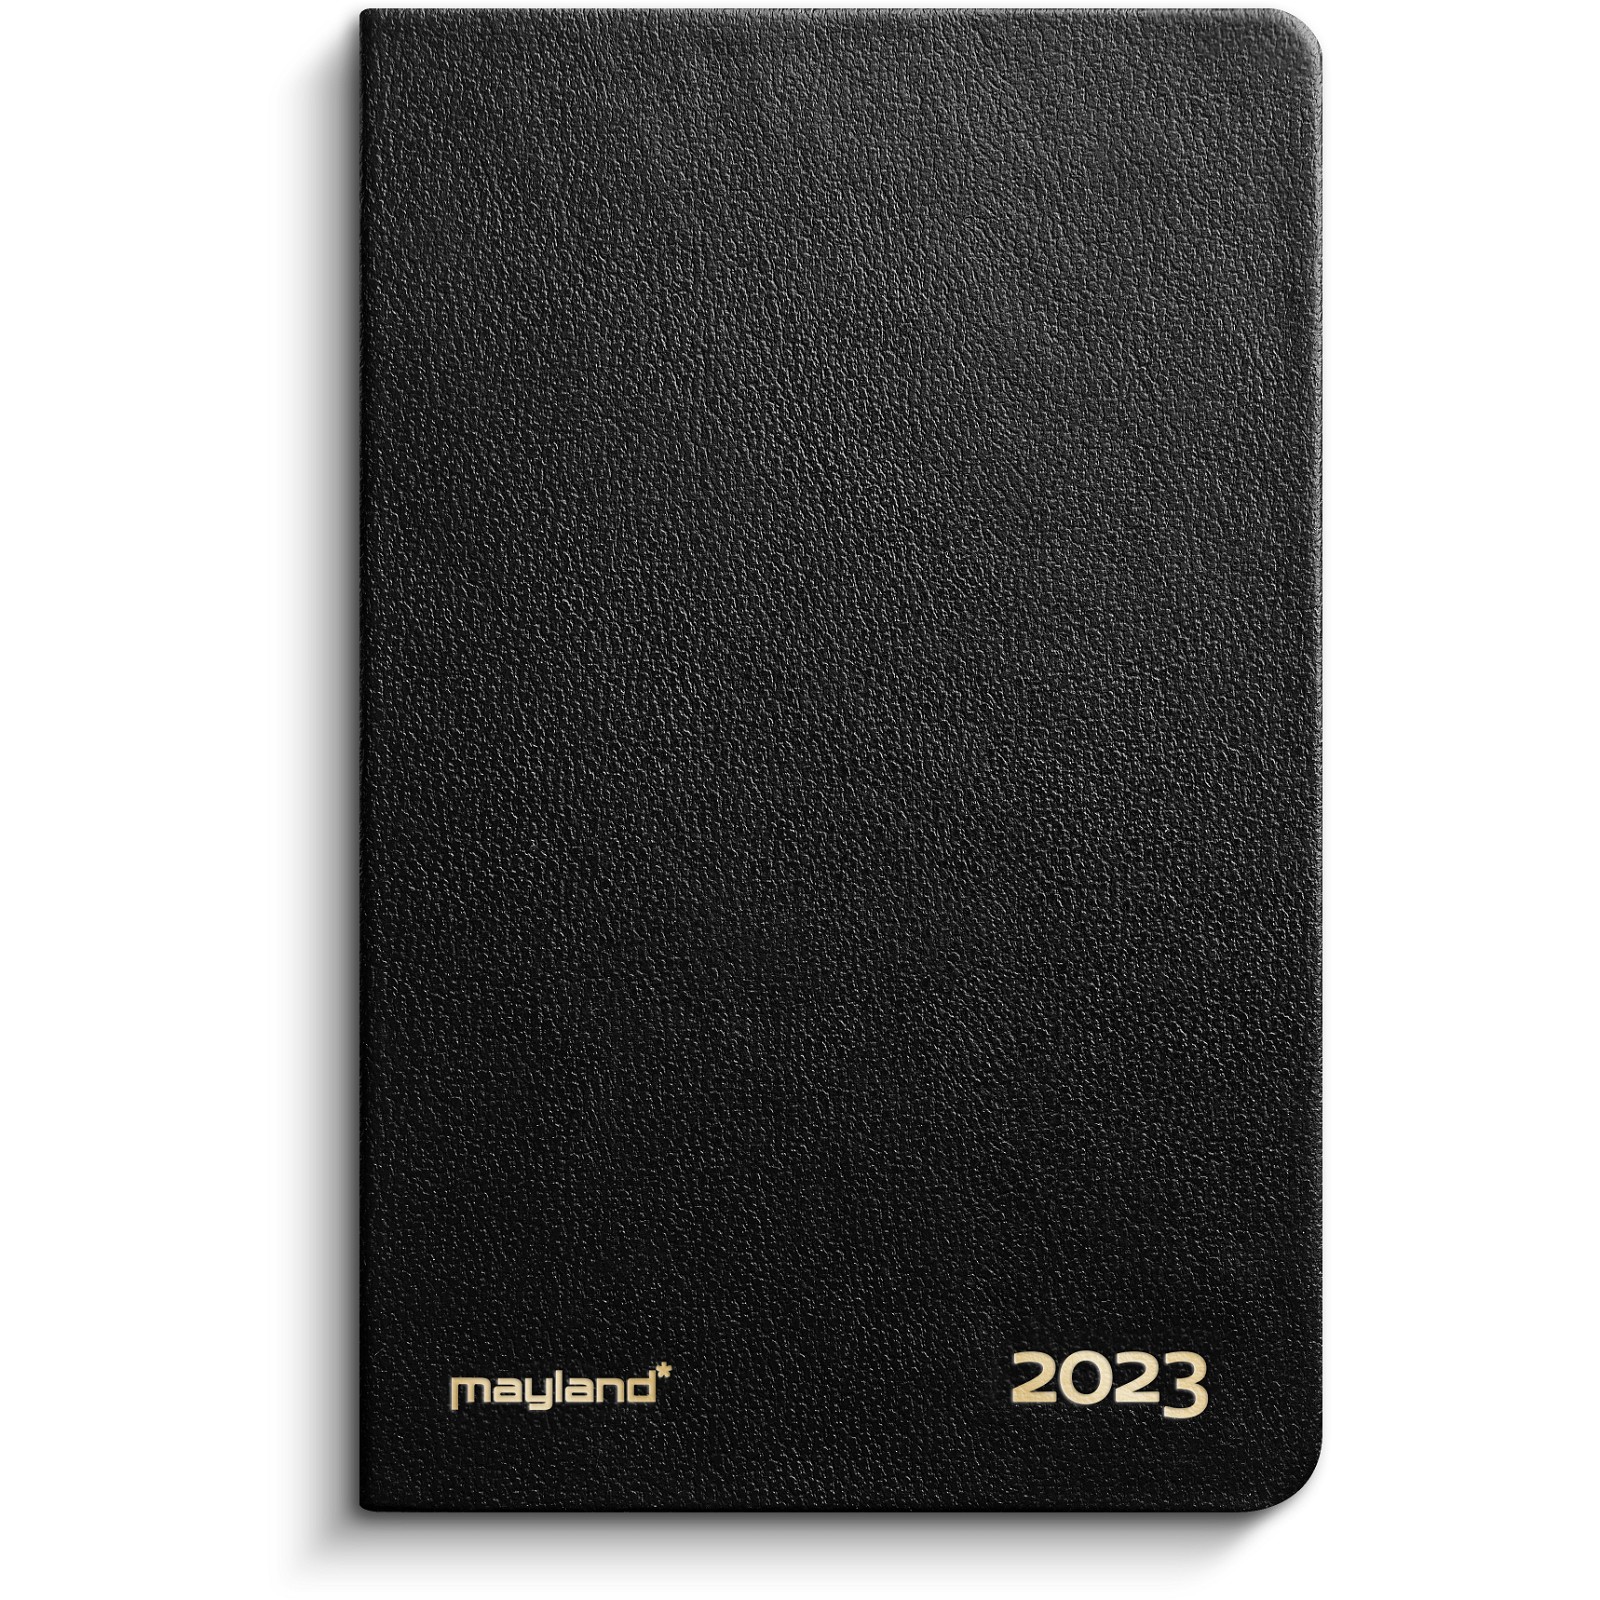 Mayland 2023 23162010 lommekalender 12x7,5x1,5cm sort